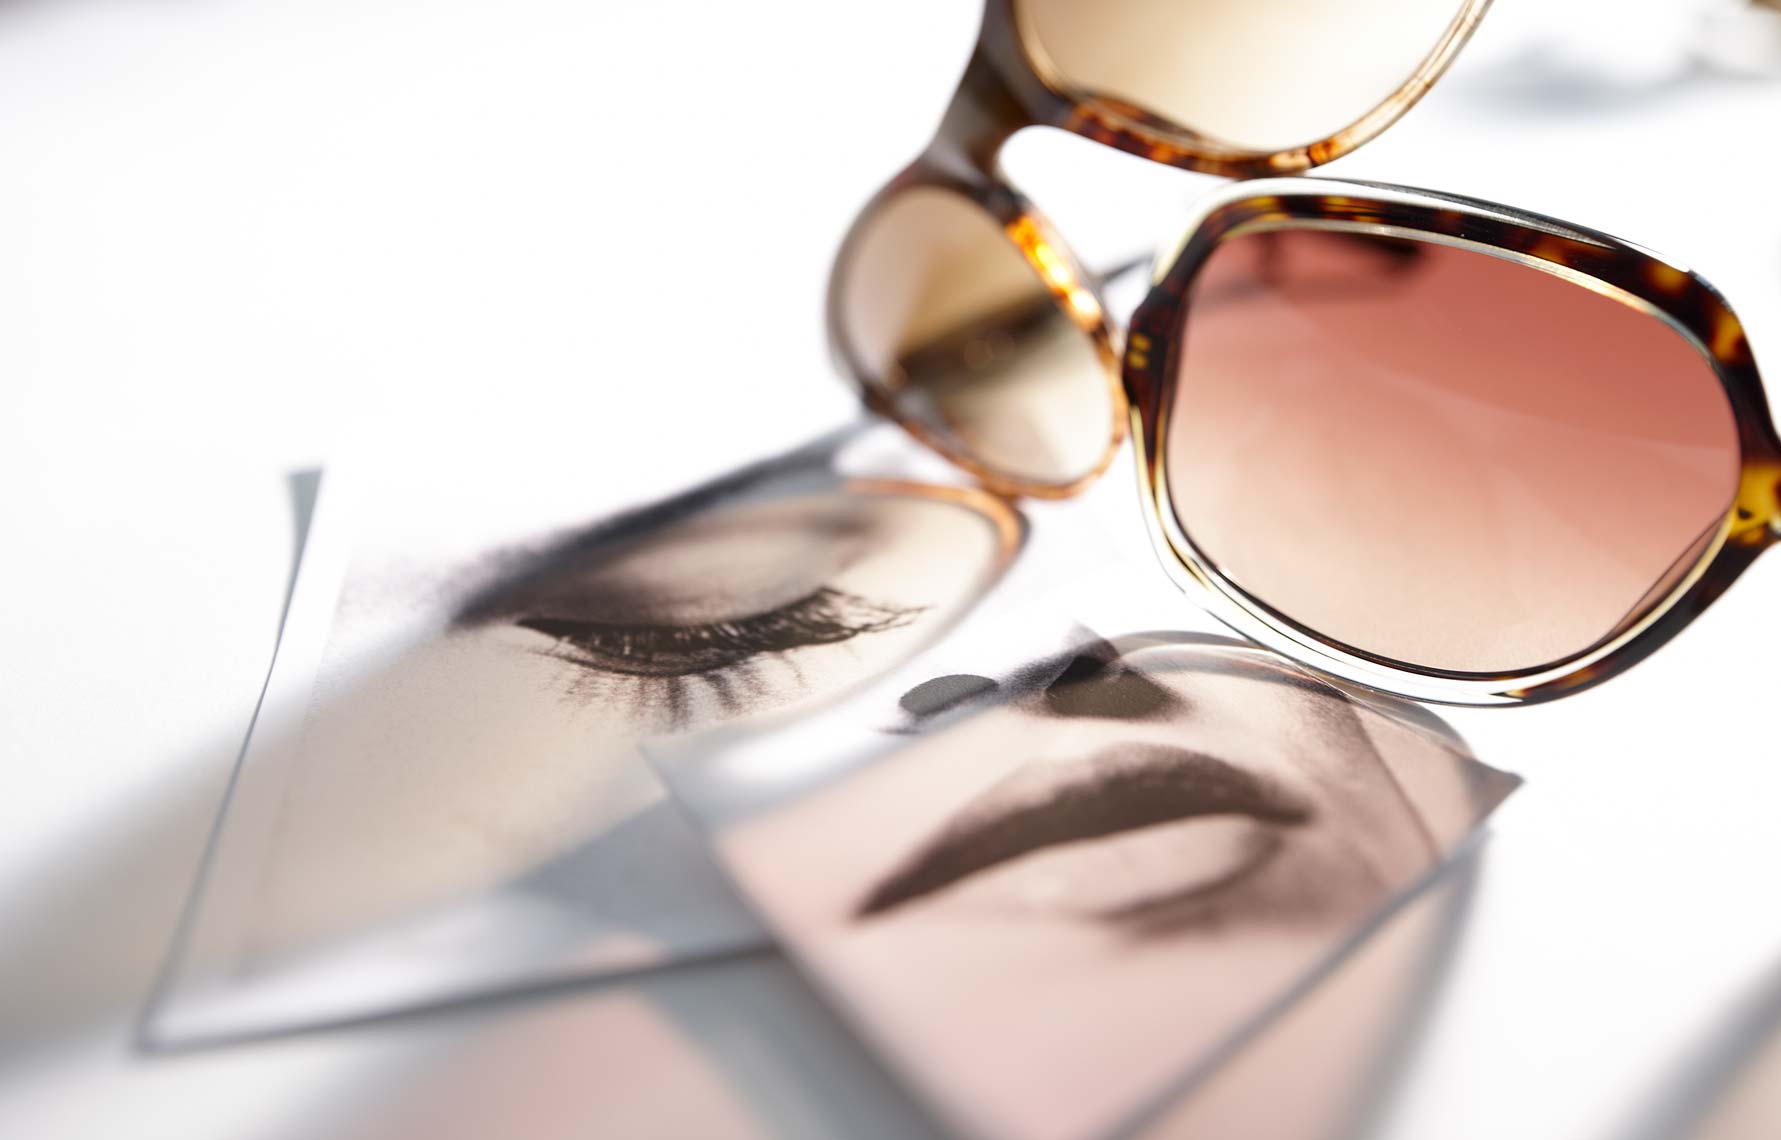 Jeff Stephens | Designer Sunglasses with Beauty prints